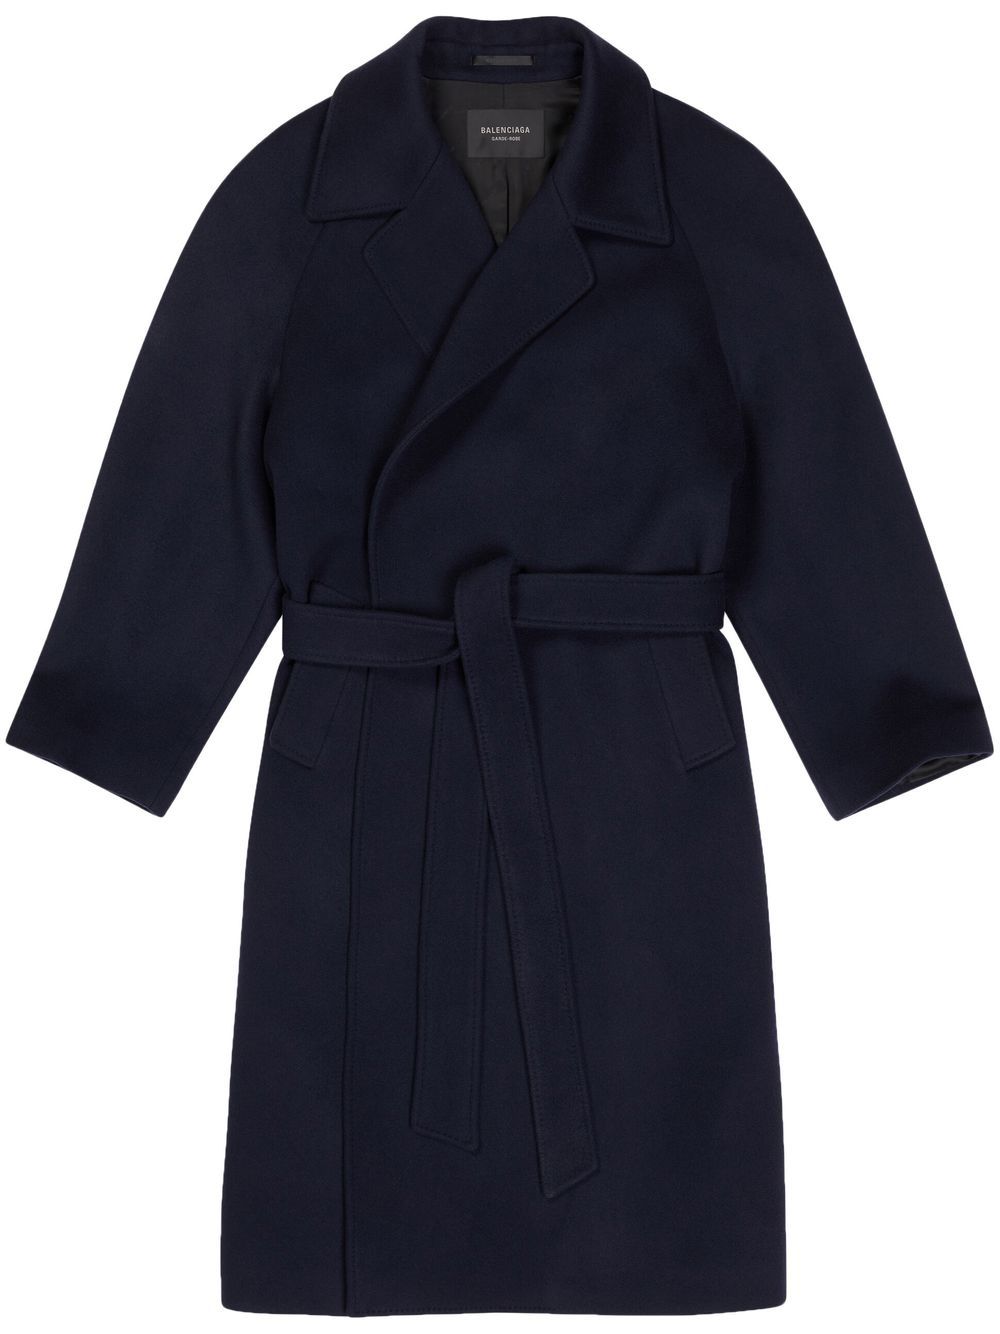 Balenciaga belted cashmere raglan coat - Blue